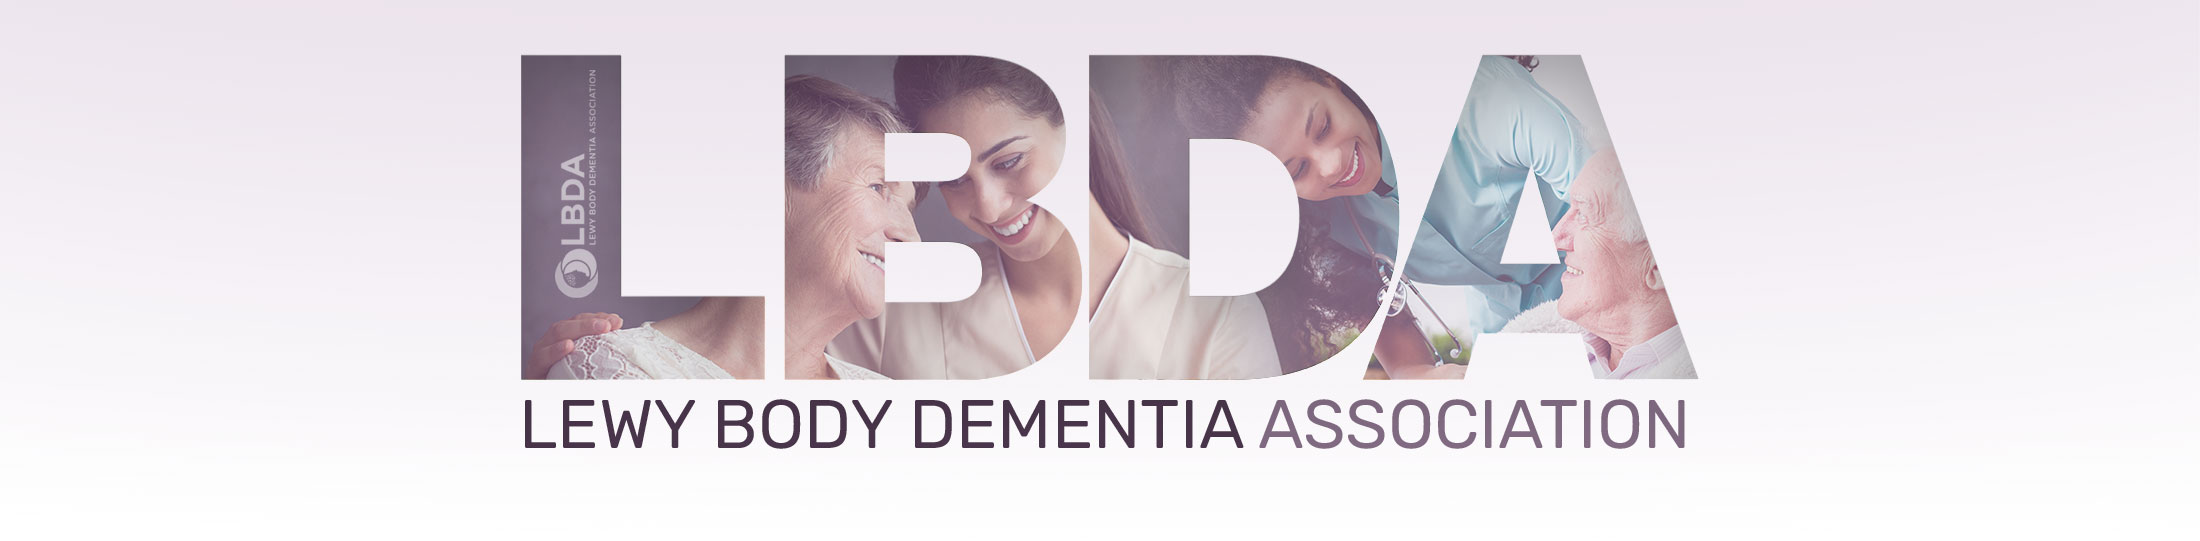 Lewy Body Dementia Association (LBDA) - Patient Banner